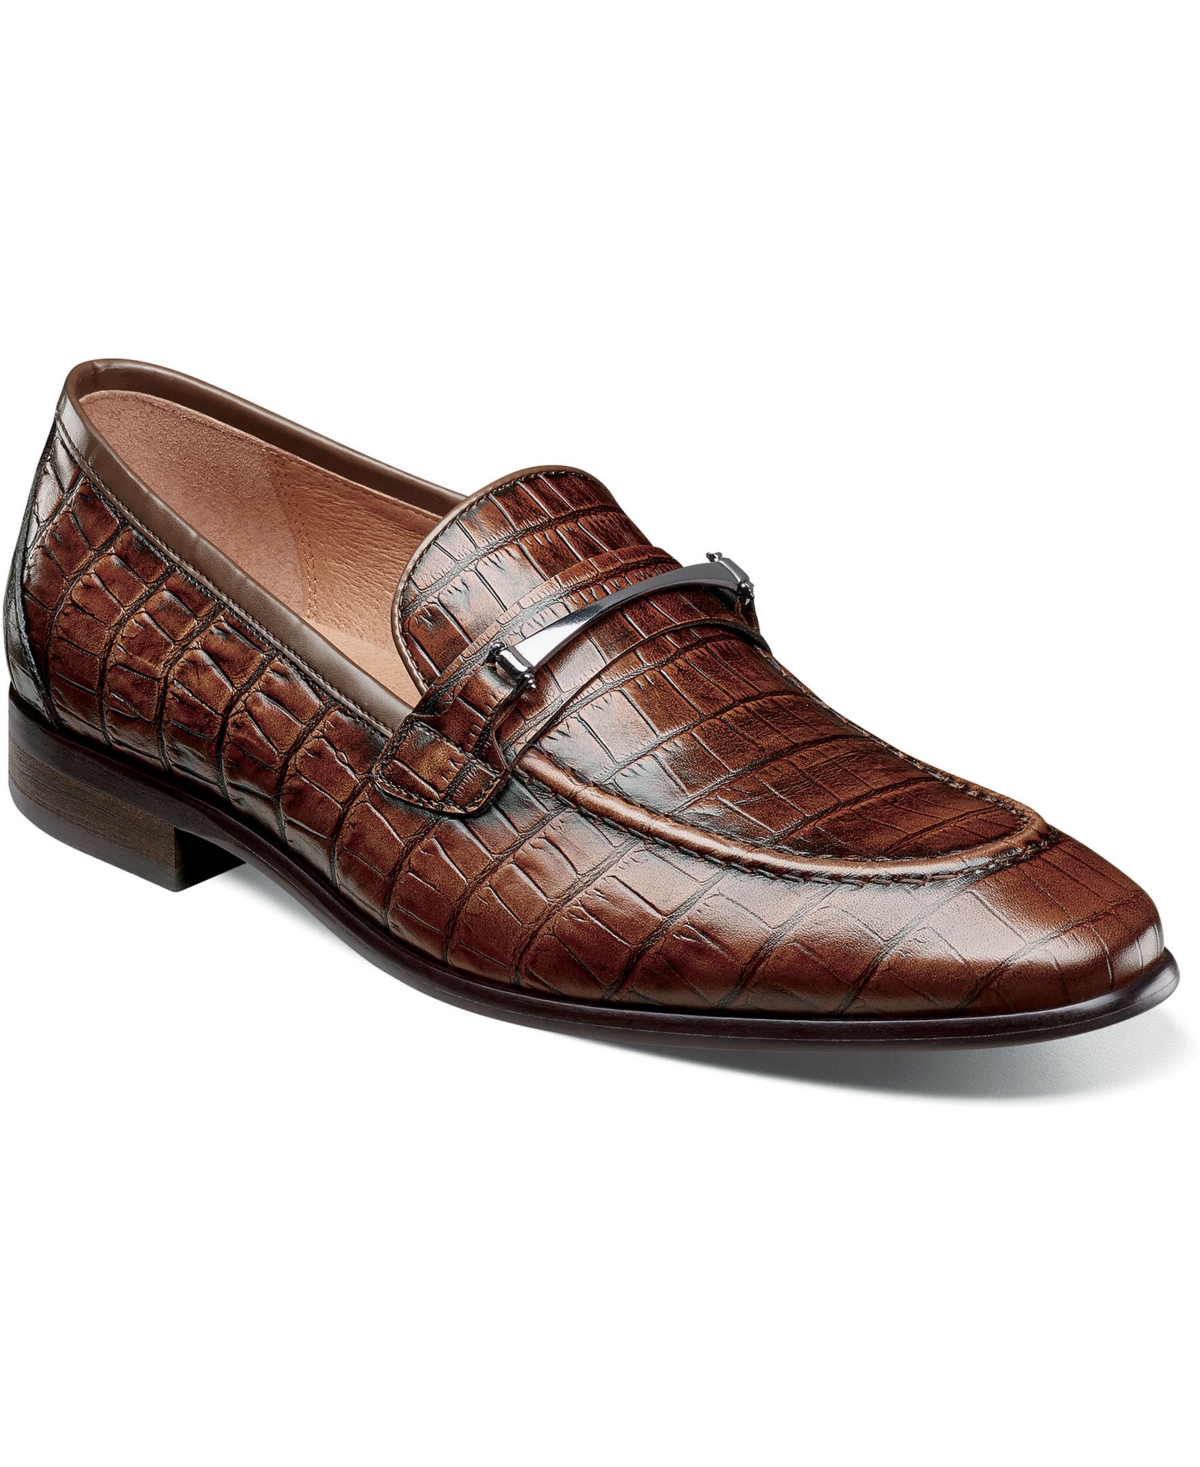 Men's Ferdinand Moc Toe Slip On Loafers - Cognac